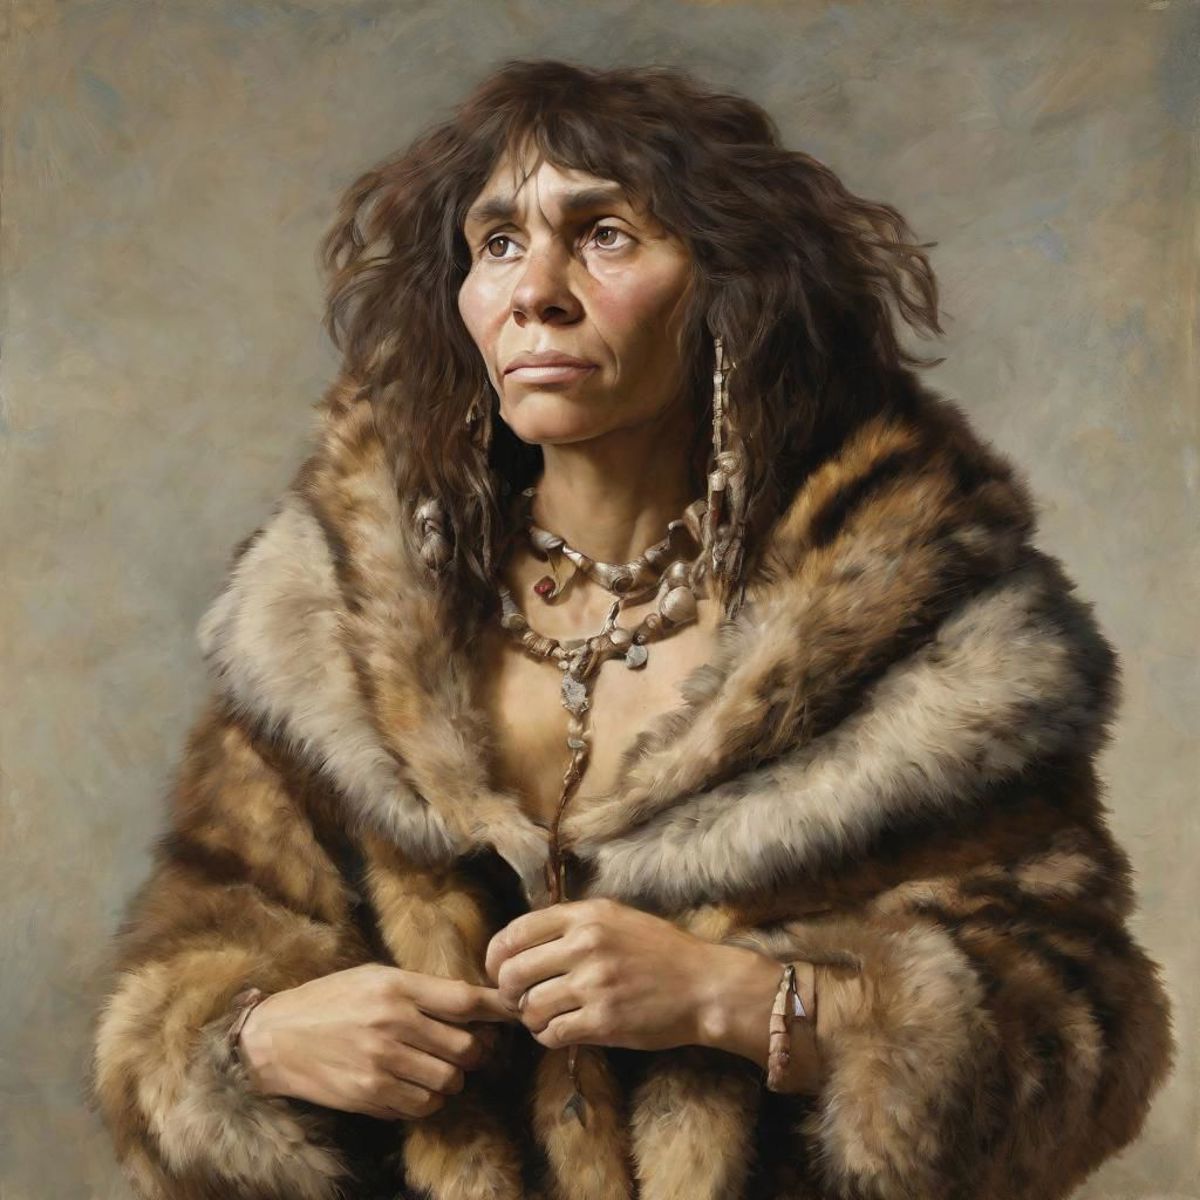 Woman Neanderthal-Lora image by cristianchirita749